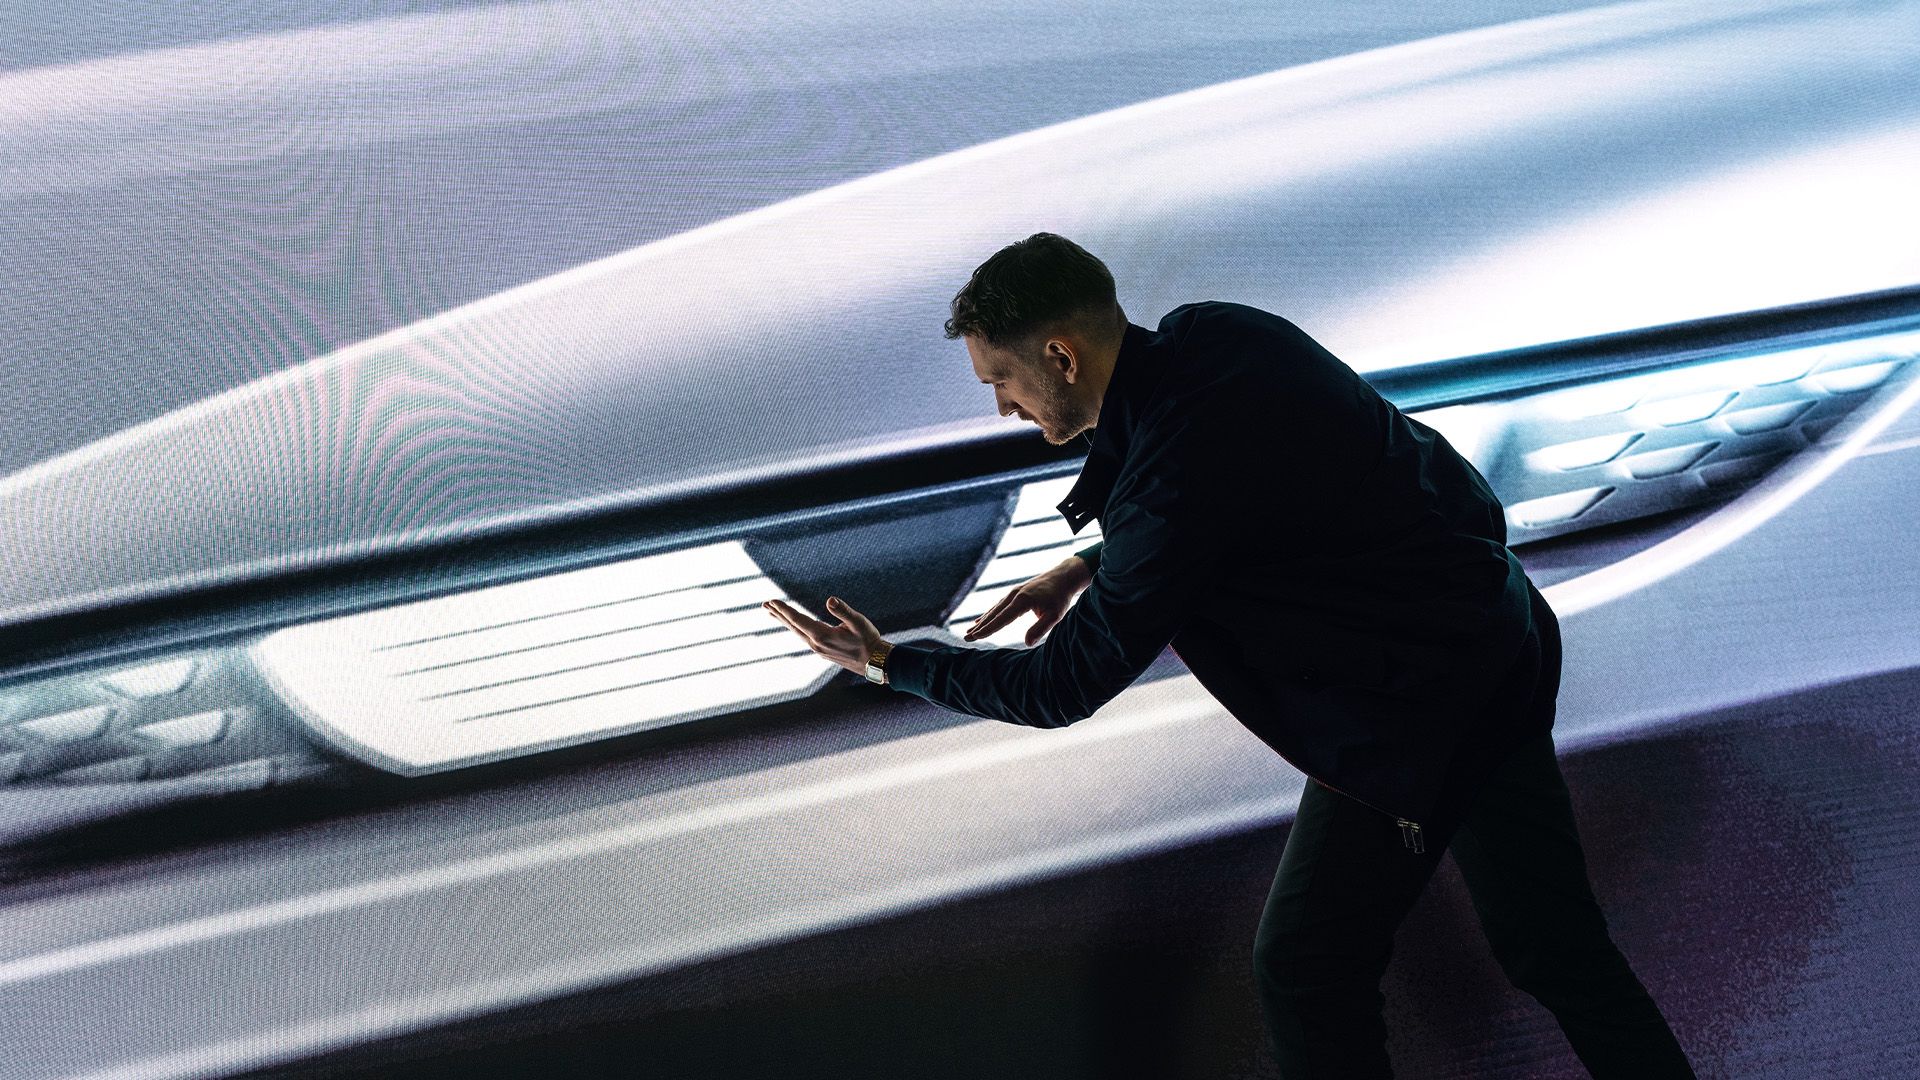 Designer Lukas Rittwage reveals the Audi eyes on a screen.